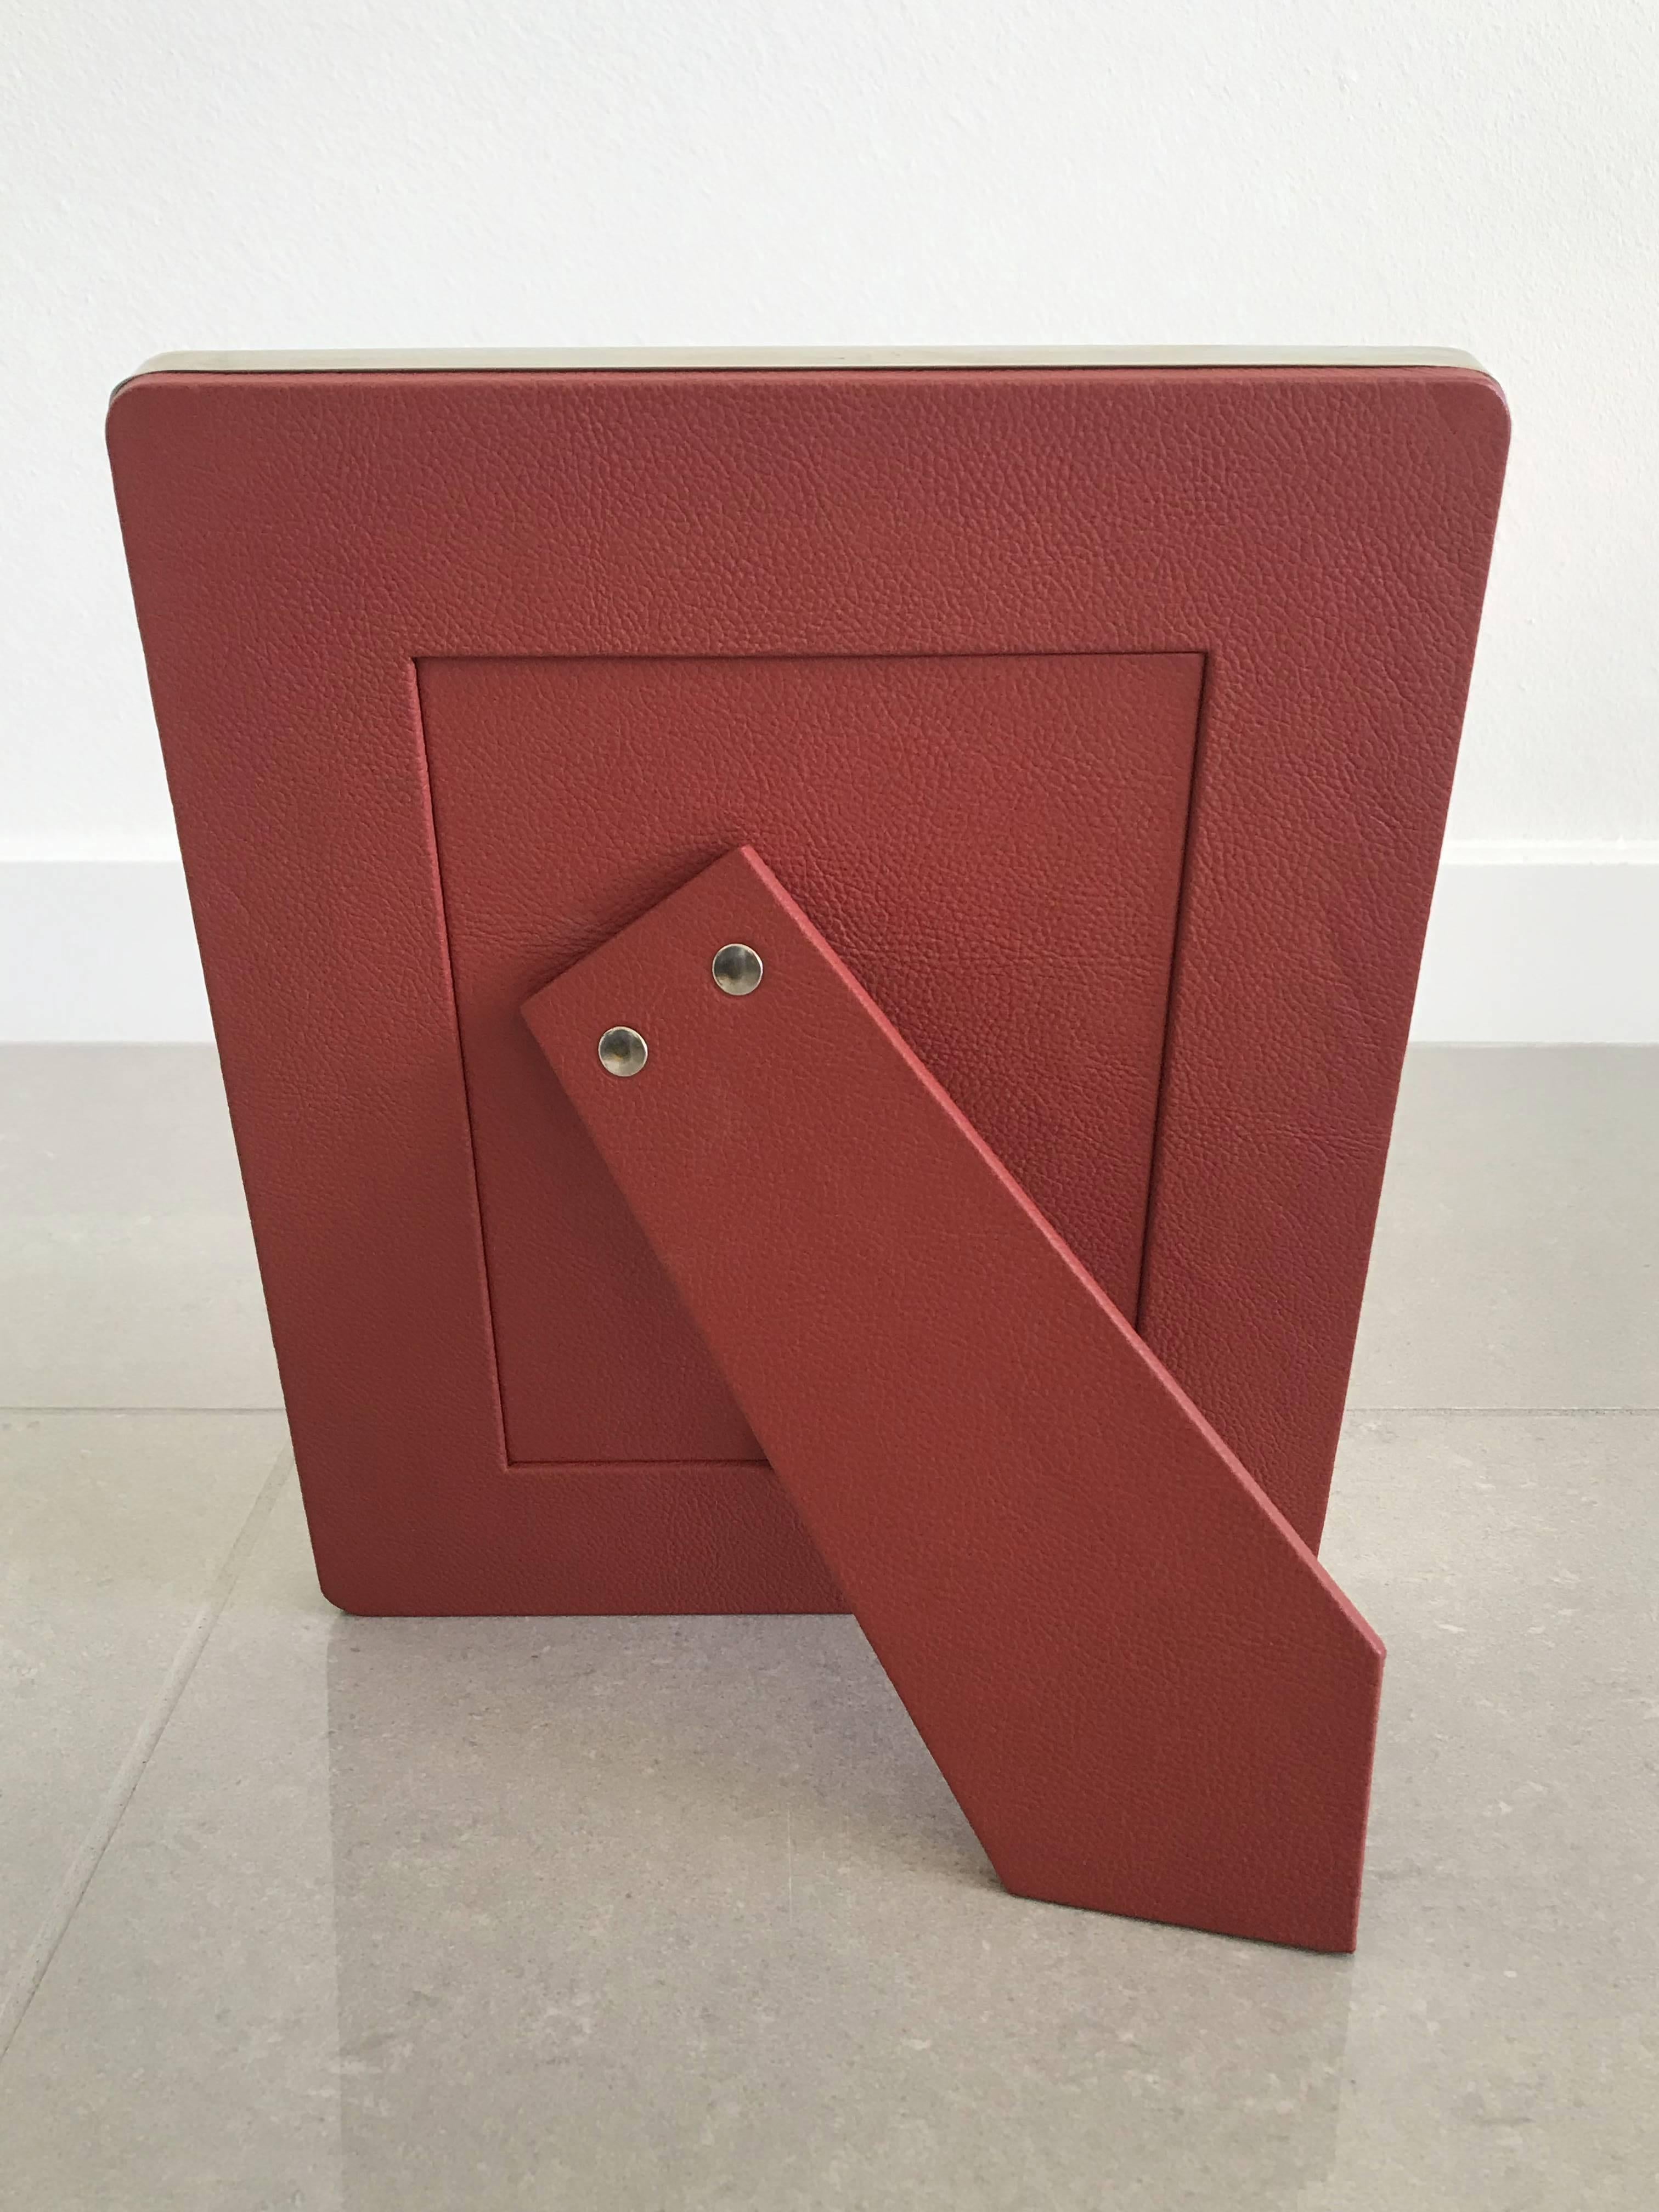 Italian Red Leather Photo Frame by Fabio Ltd - LAST 1 IN STOCK